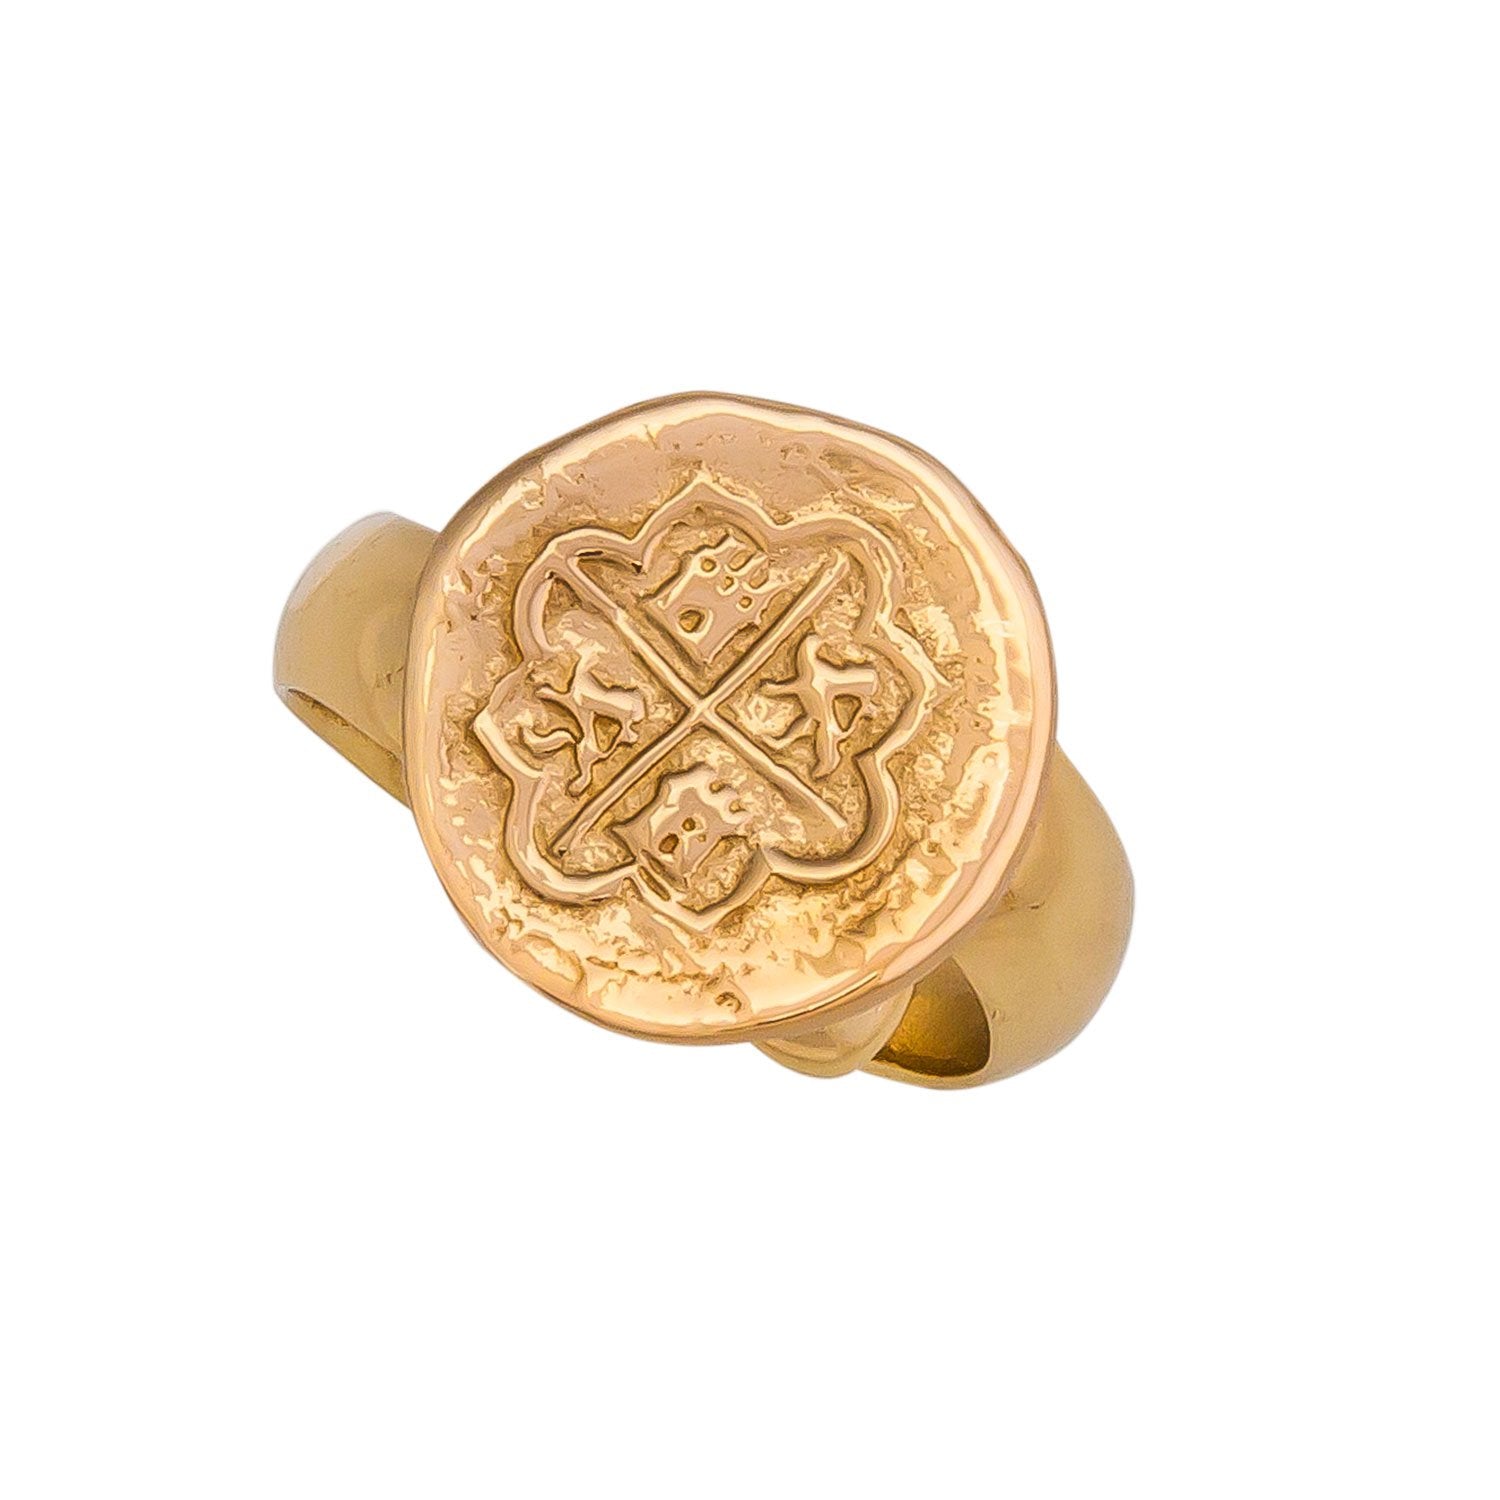 Alchemia Replica Spanish Coin Adjustable Ring | Charles Albert Jewelry